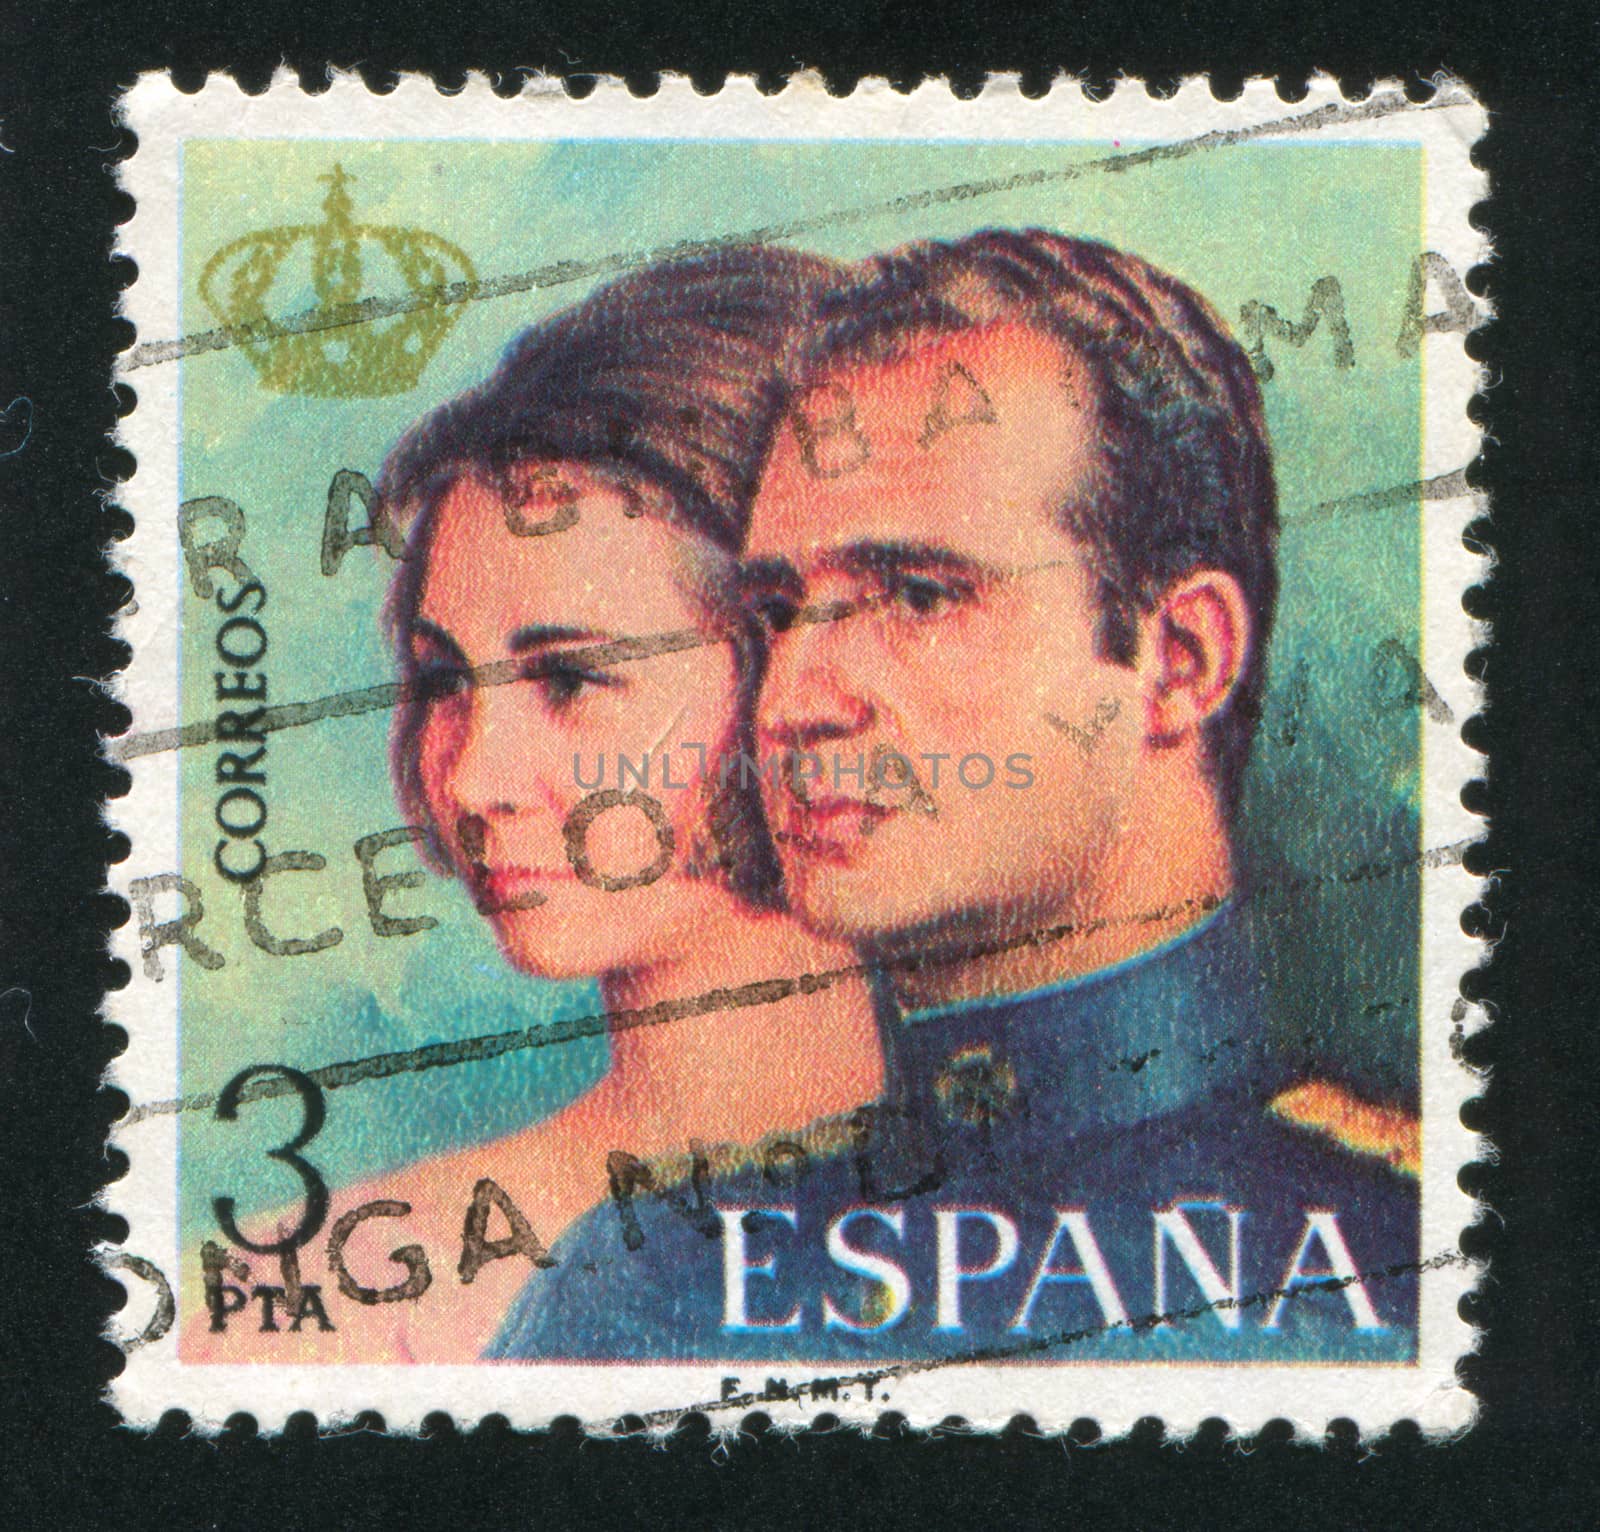 SPAIN - CIRCA 1975: stamp printed by Spain, shows Qween Sofia and King Juan Carlos I, circa 1975